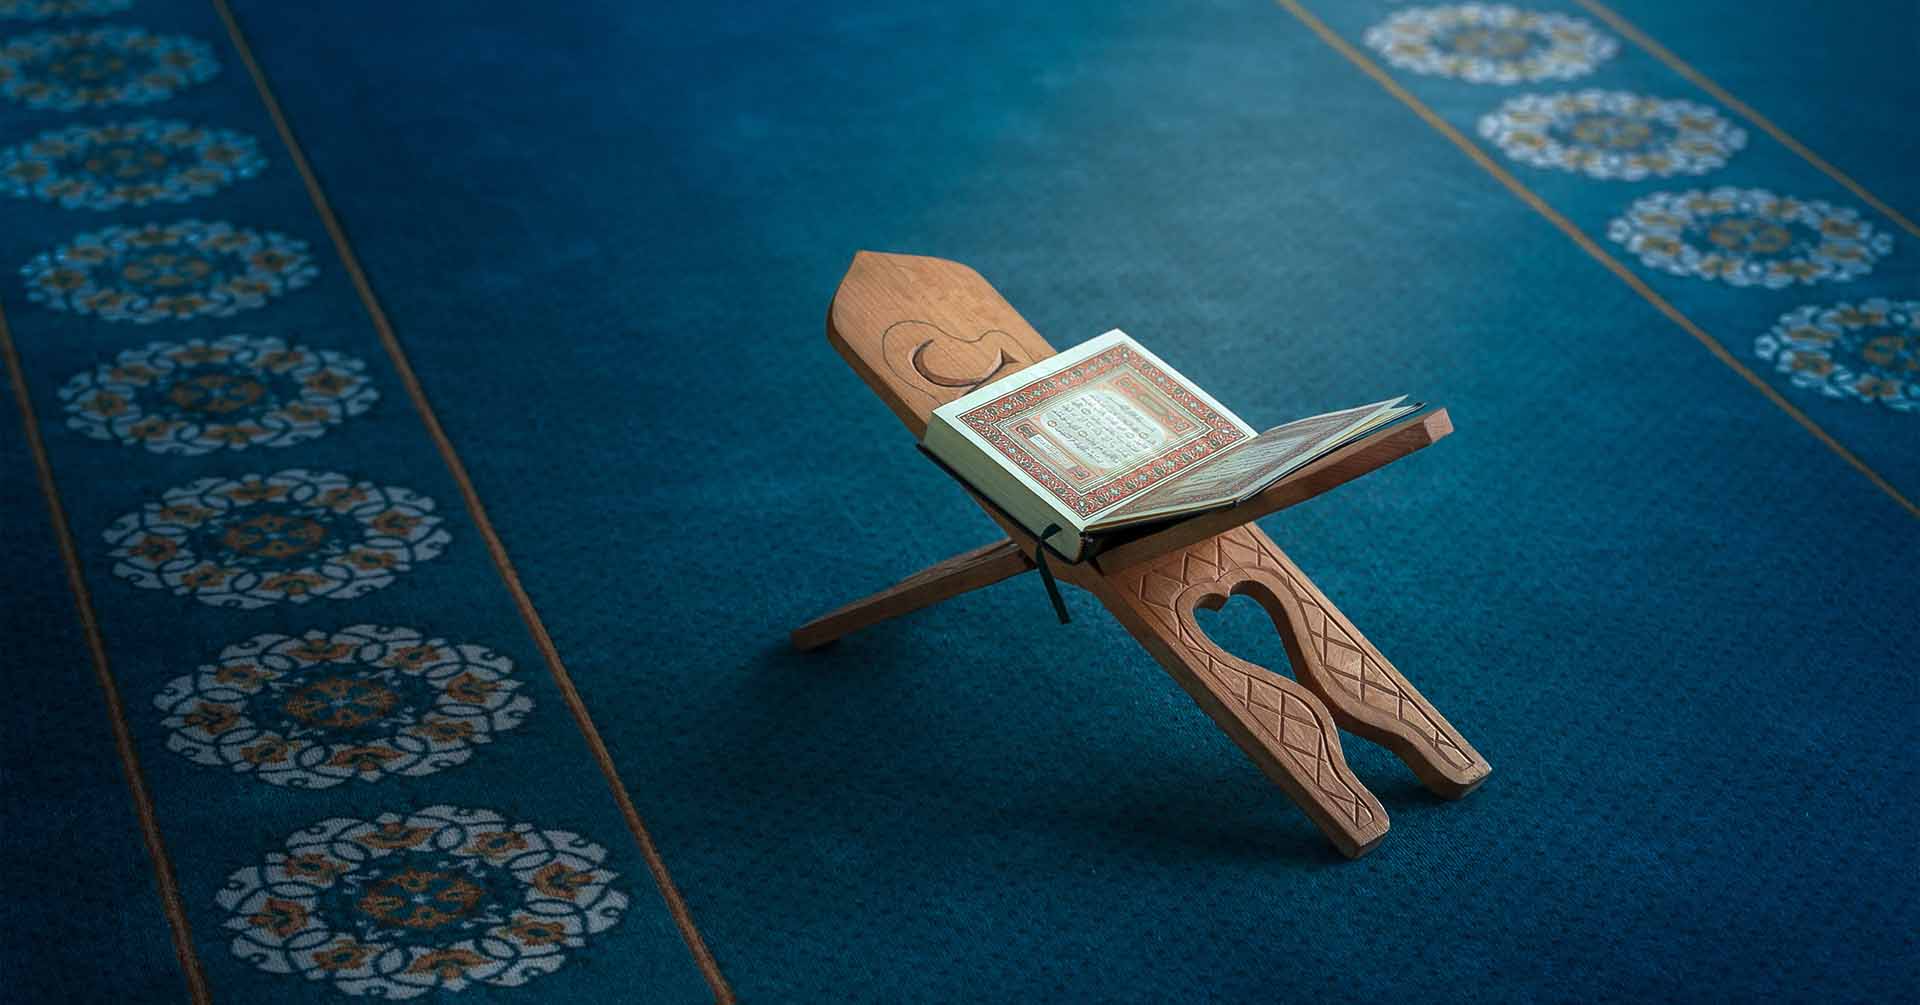 quran on blue prayer carpet 5 pillars of islam